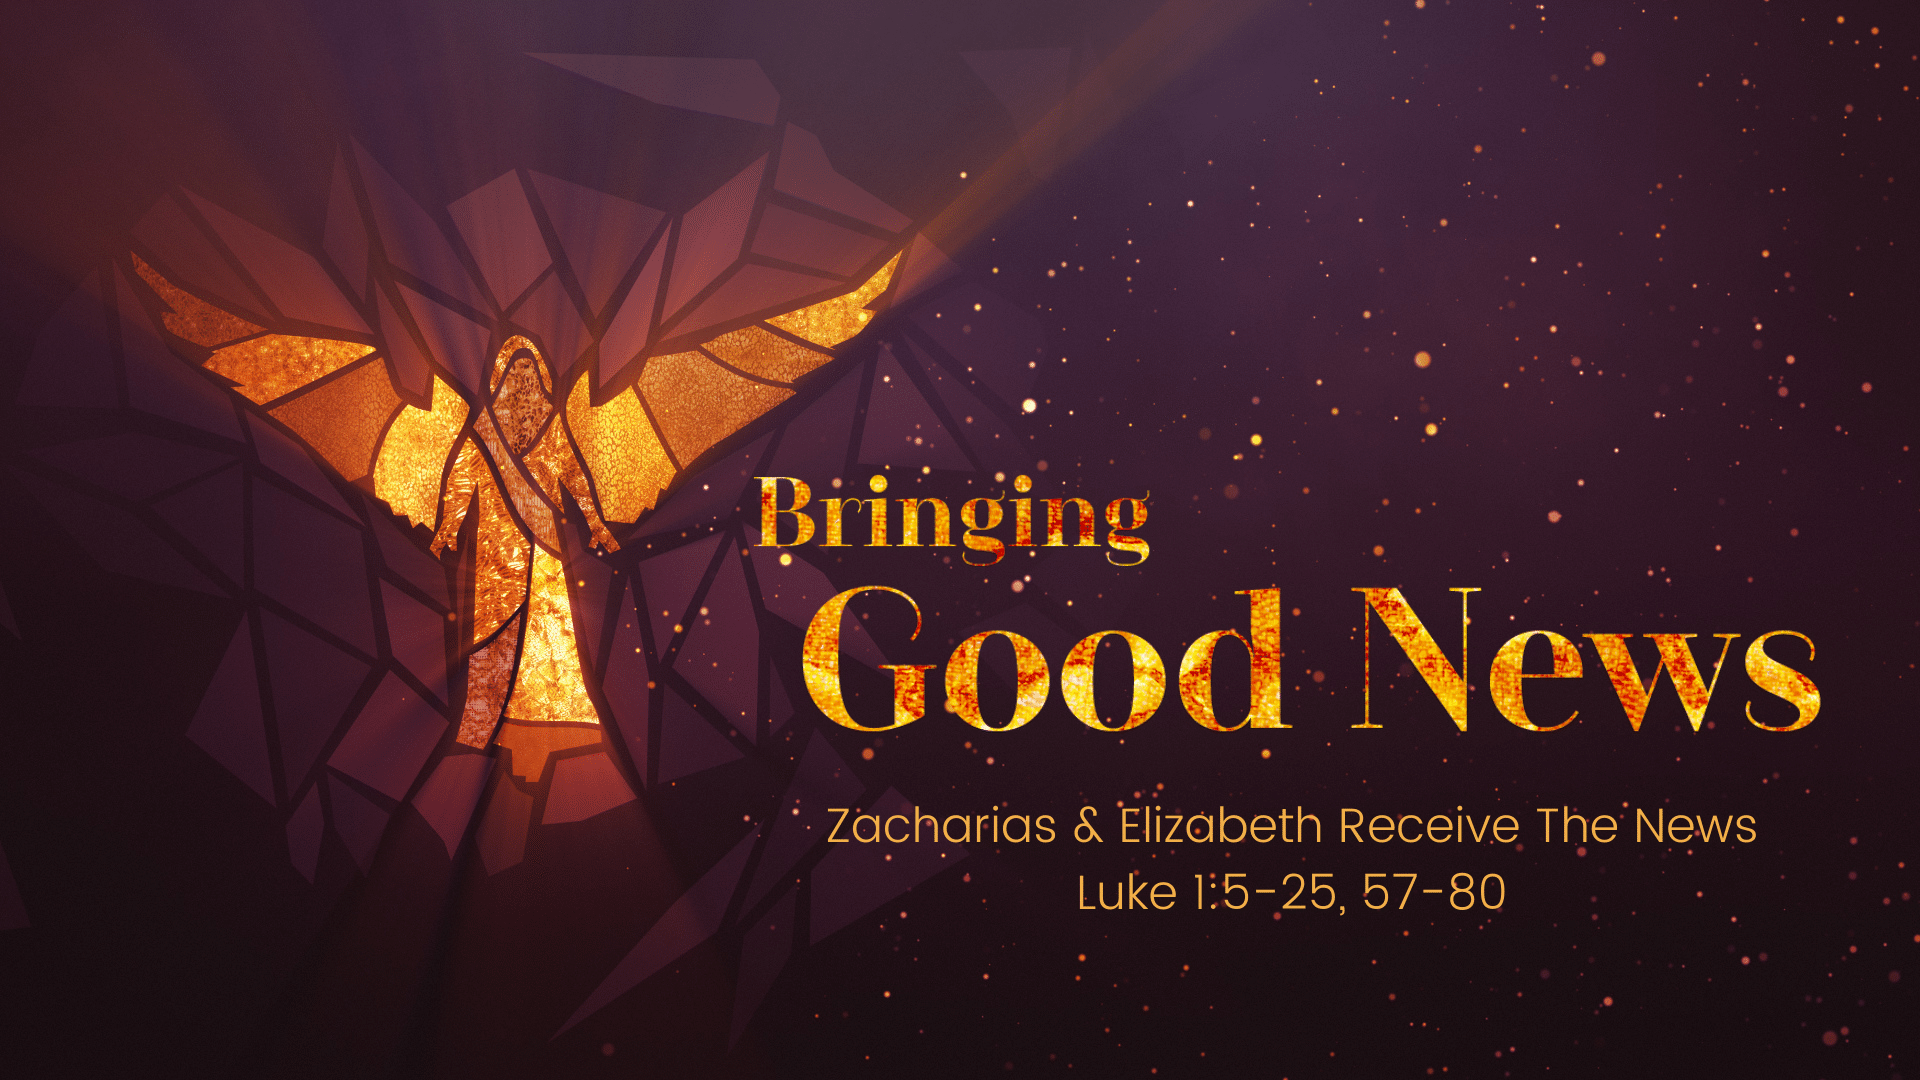 Bringing Good News: Zacharias & Elizabeth Receive The News